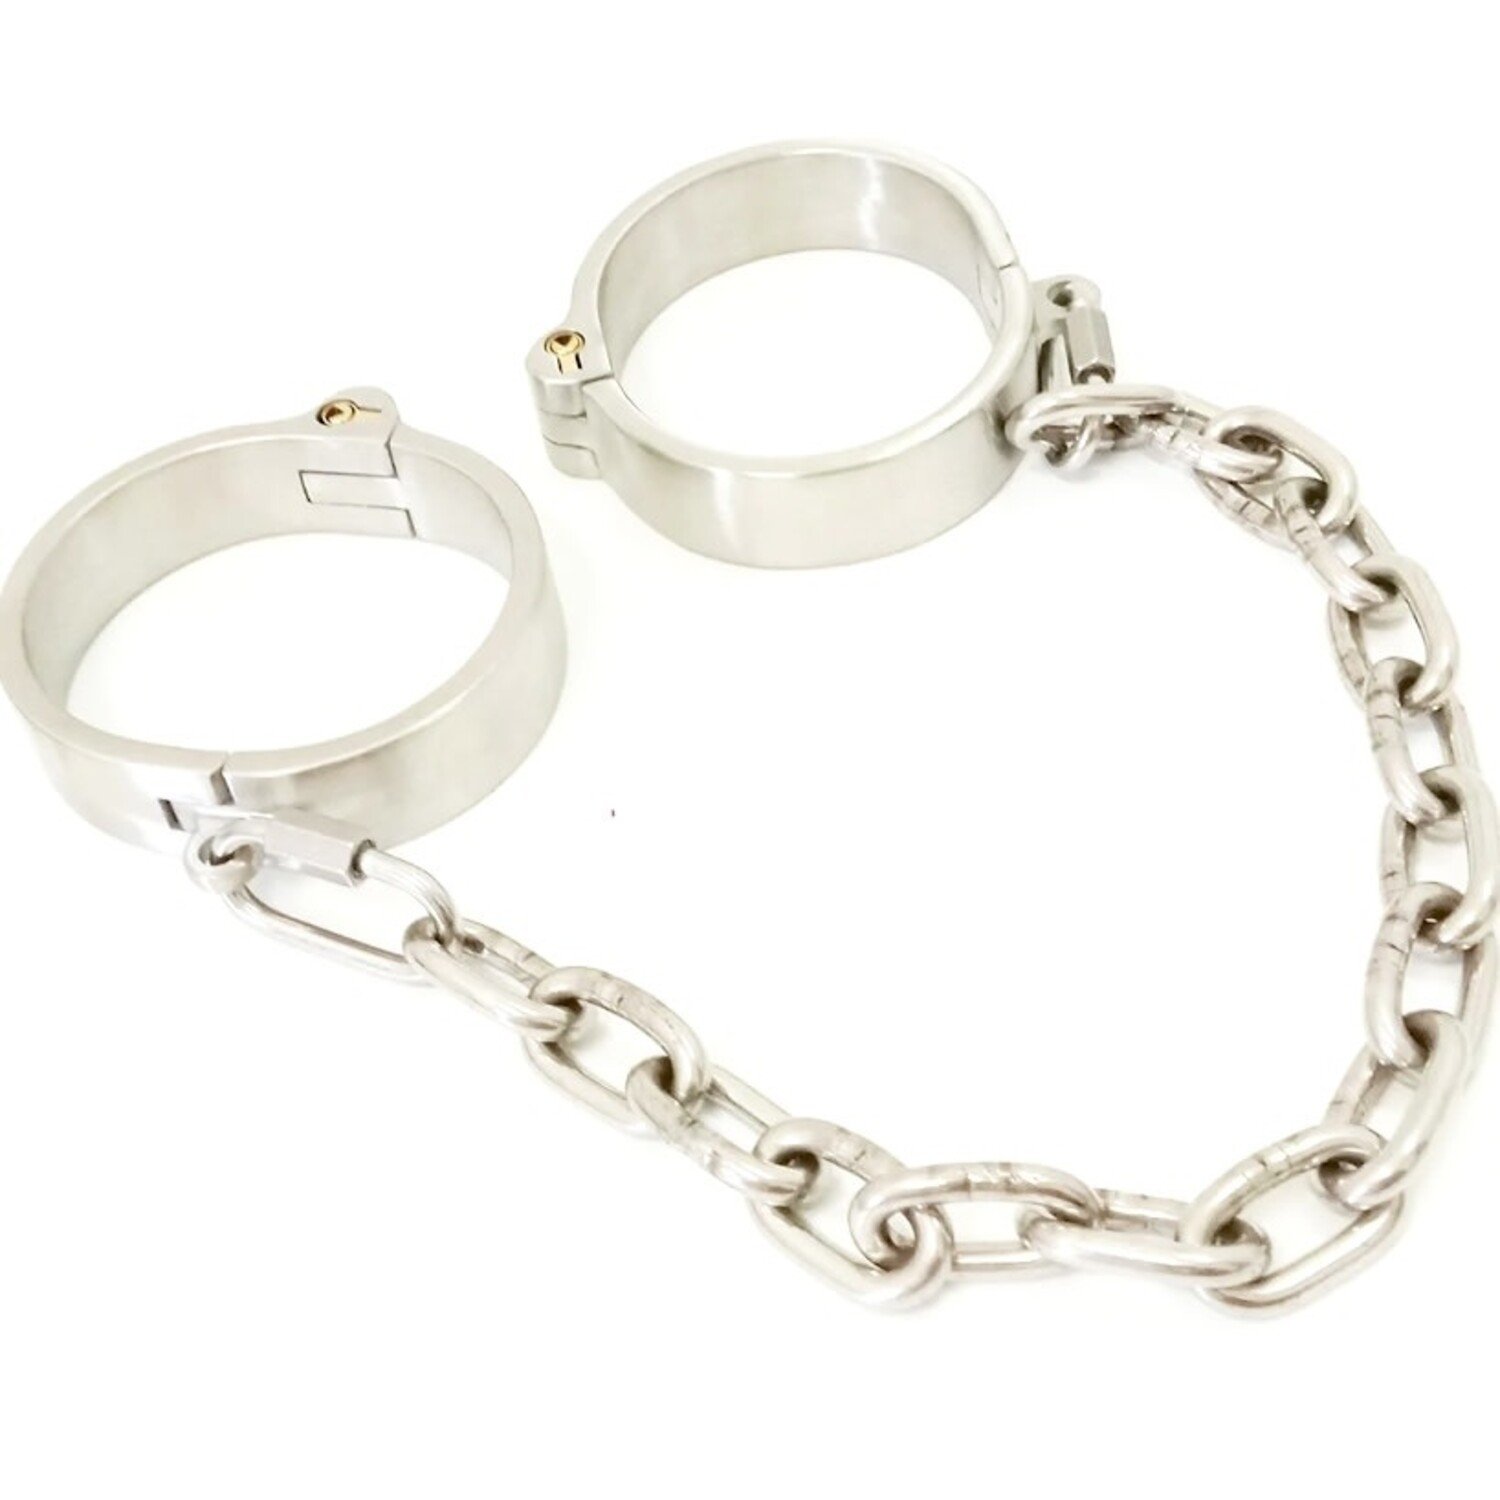 https://cdn.shoplightspeed.com/shops/627913/files/60220640/1500x4000x3/kulla-brushed-stainless-steel-own-me-ankle-cuffs.jpg